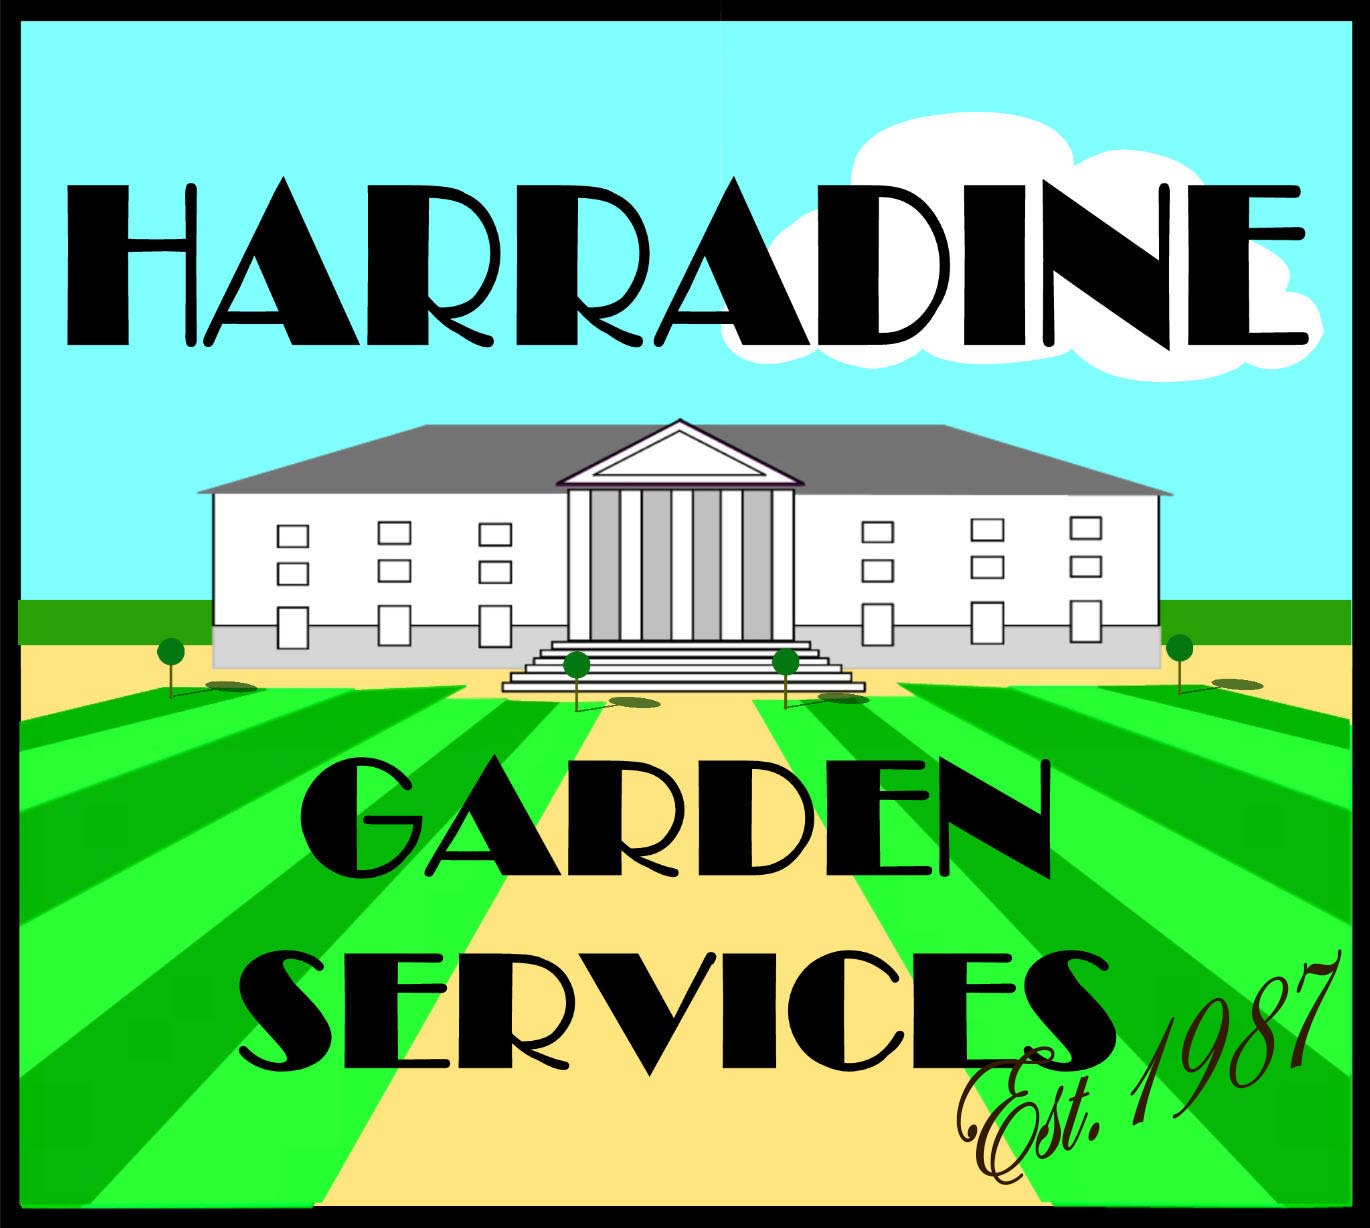 Harradine Garden Services